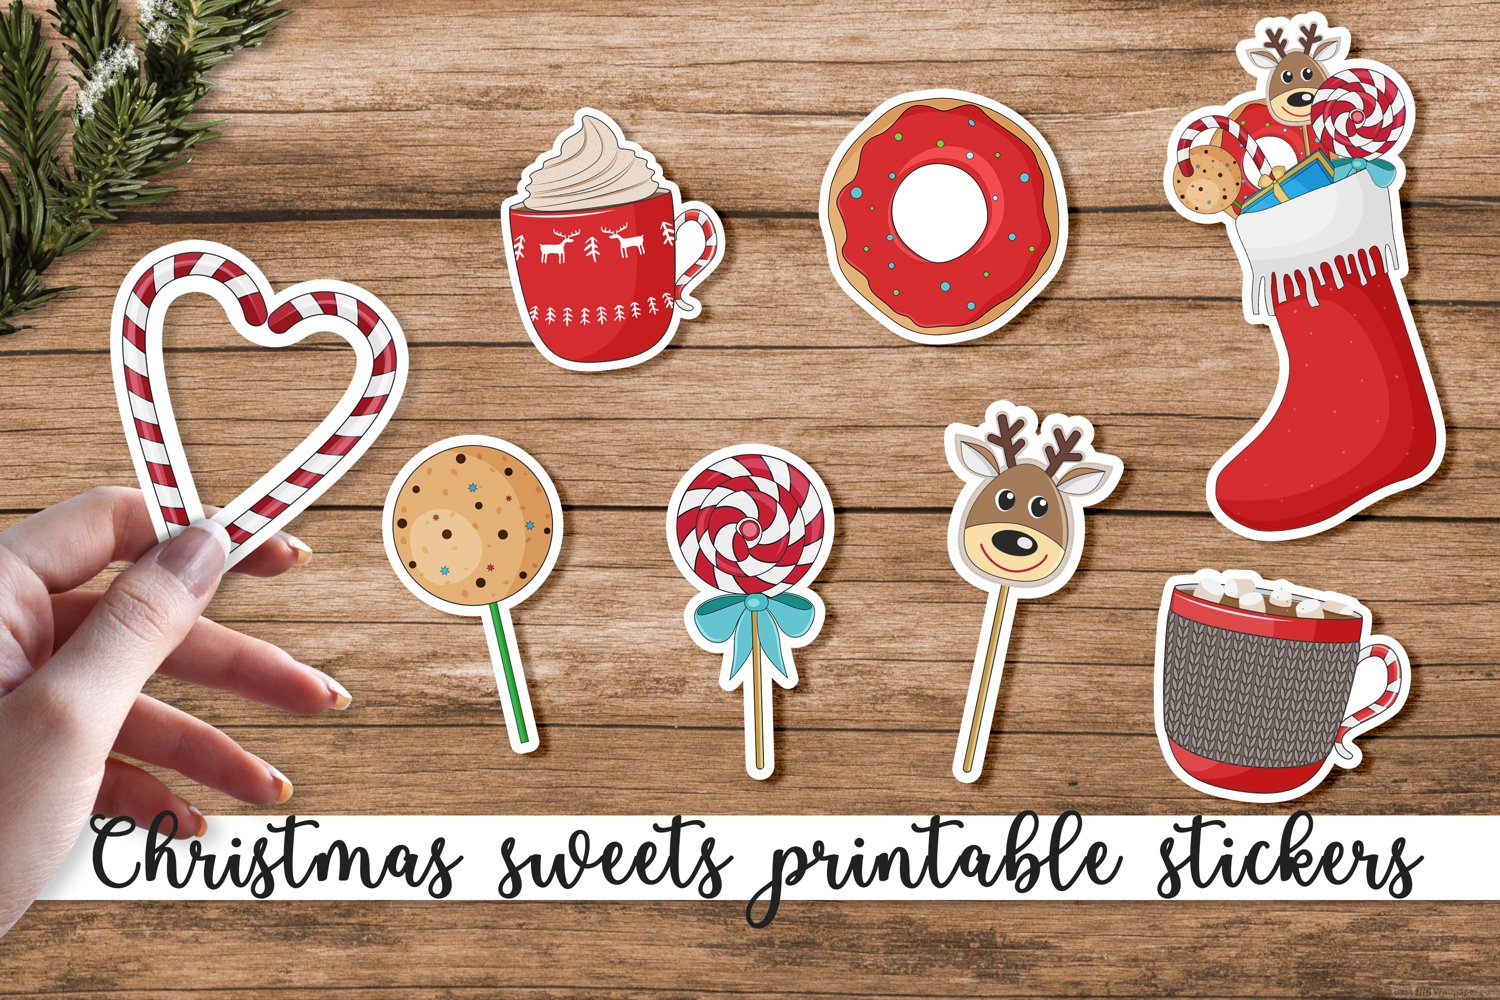 Christmas sweets printable stickers.